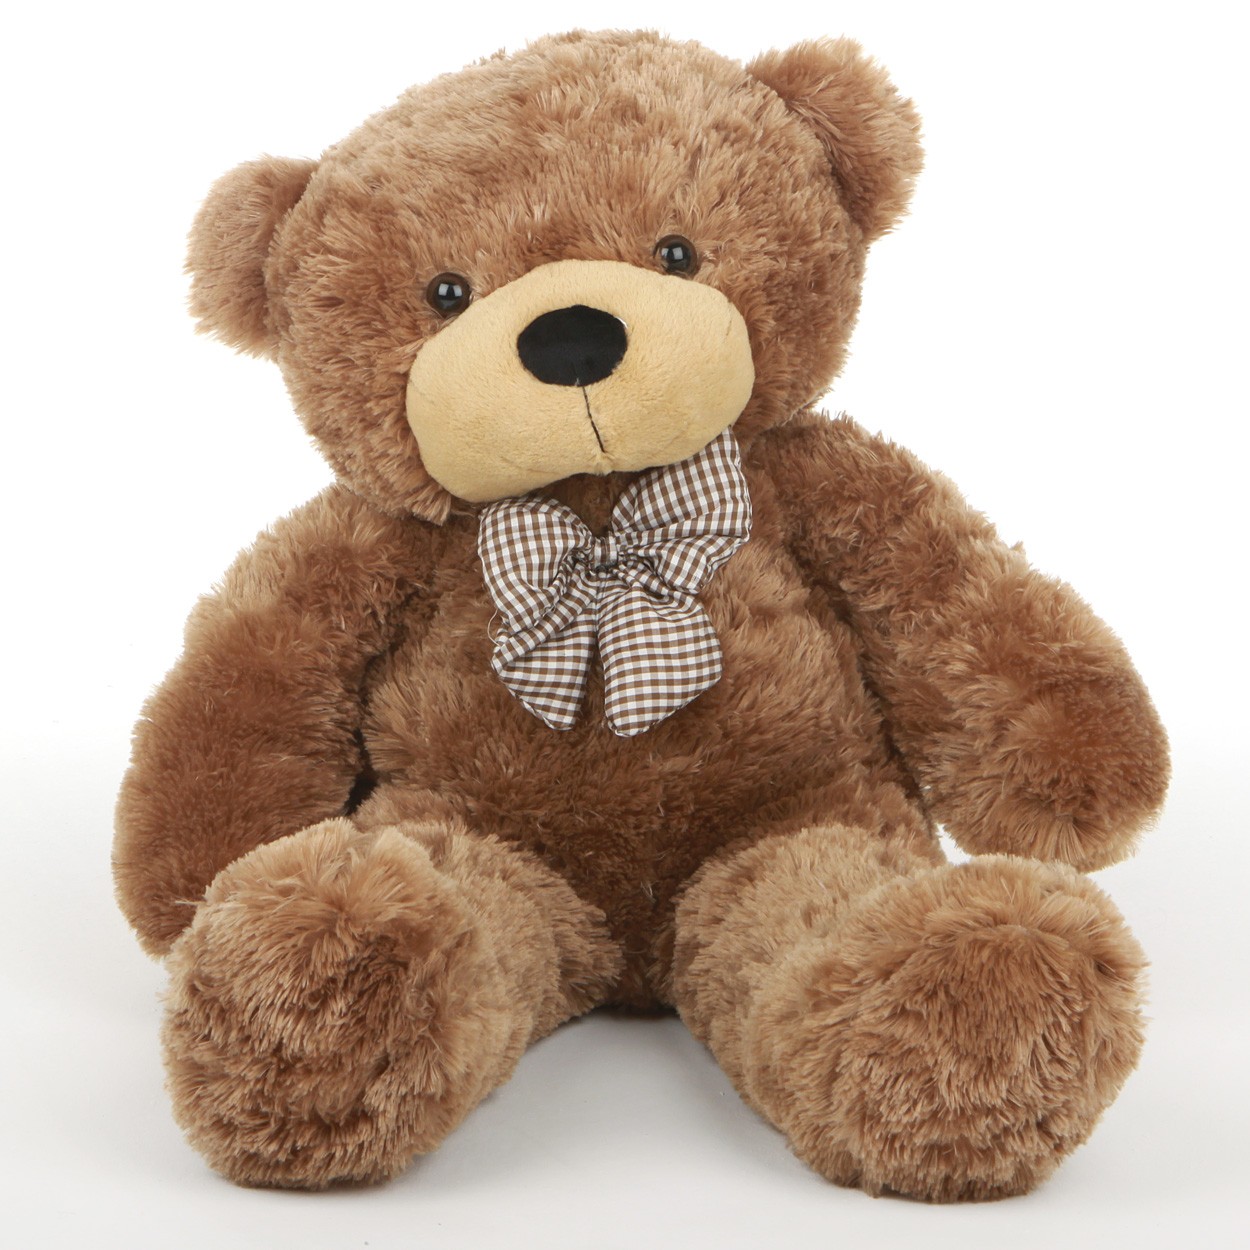 Мишка. Тедди Беар. Мишки Тедди Беар. Плюшевый медведь Teddy Bear. Тедди Беар игрушка.